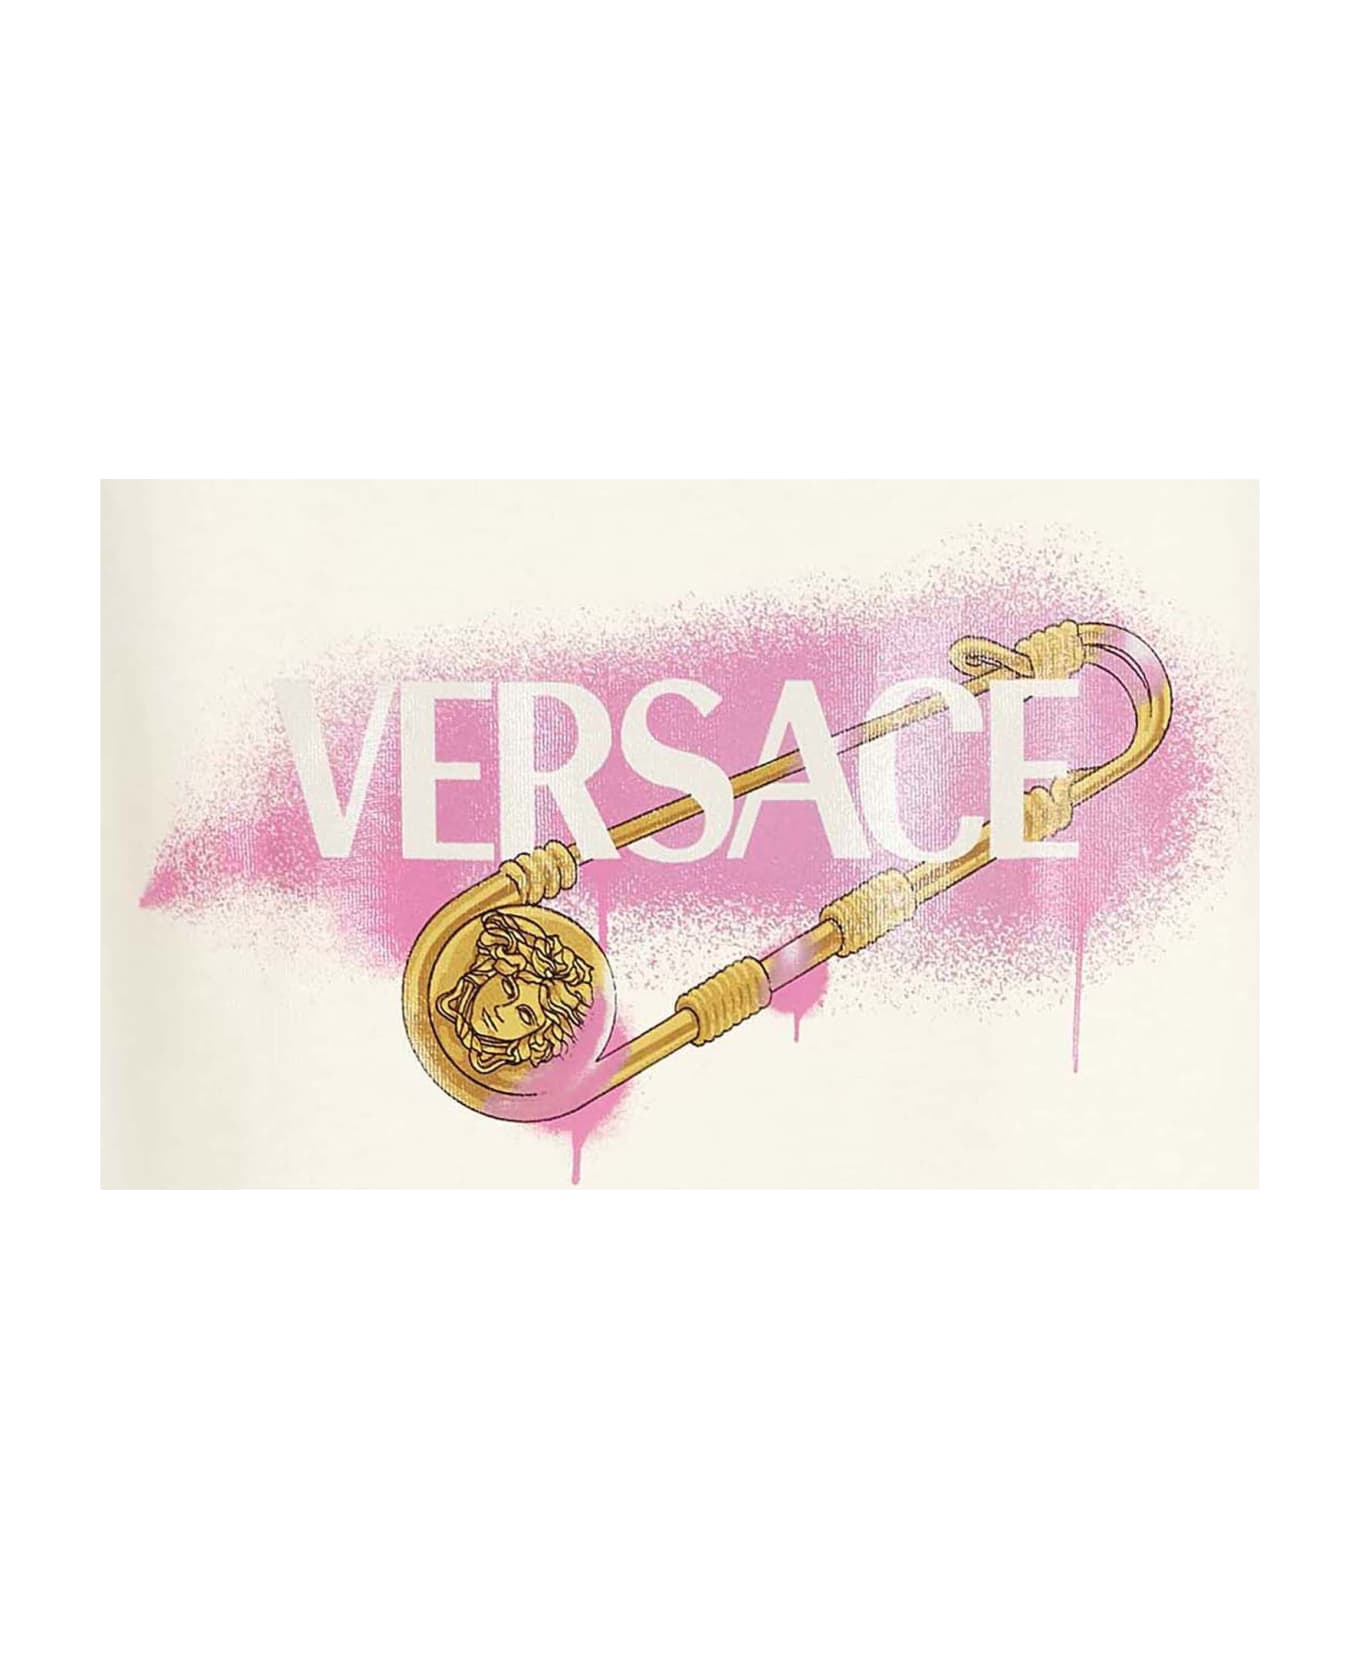 Versace 'logo Pin' T-shirt - White